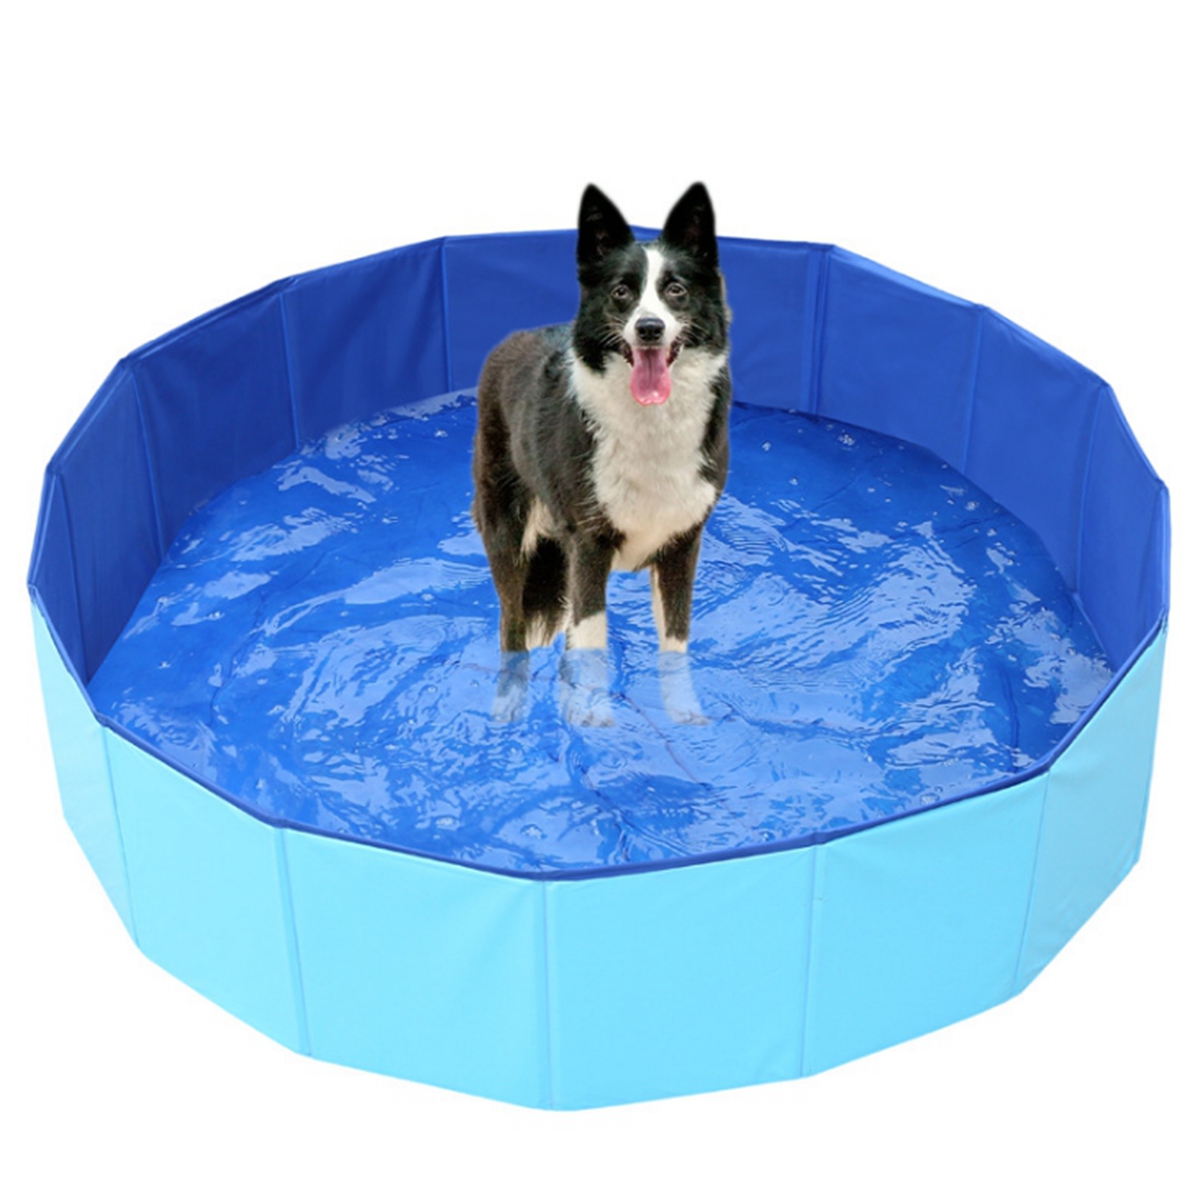 60100cm-Folding-Dog-Bath-Pool-Pet-Swimming-Bath-Tub-Kiddie-Pool-for-Dogs-Cats-Kids-1881131-4